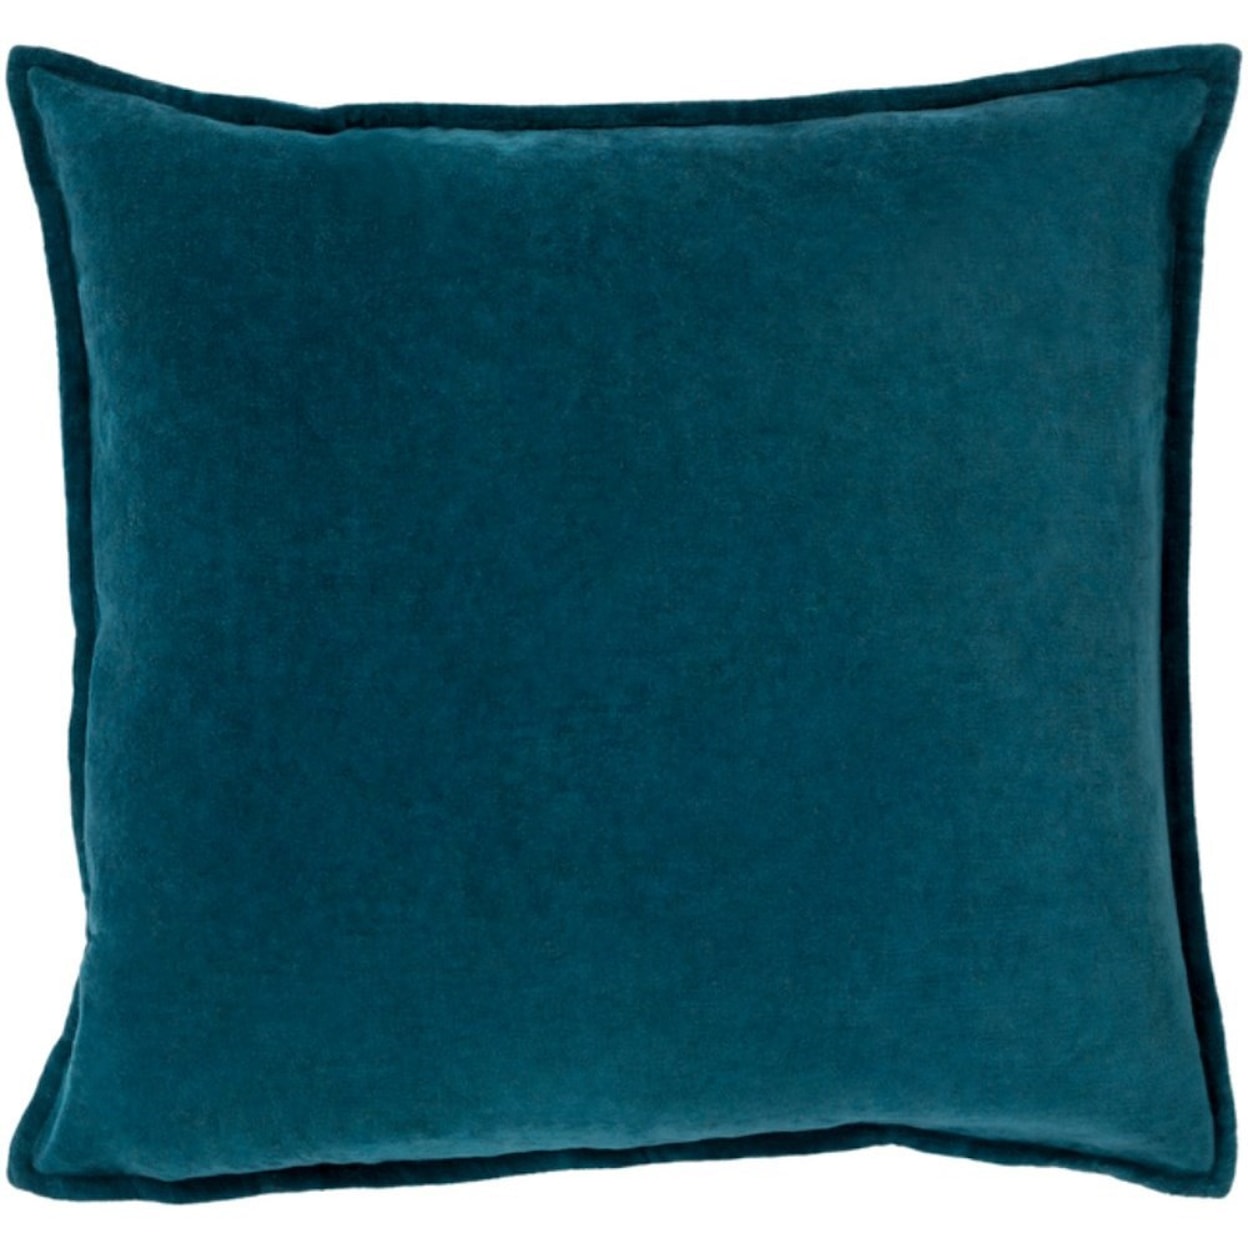 Ruby-Gordon Accents Cotton Velvet Pillow